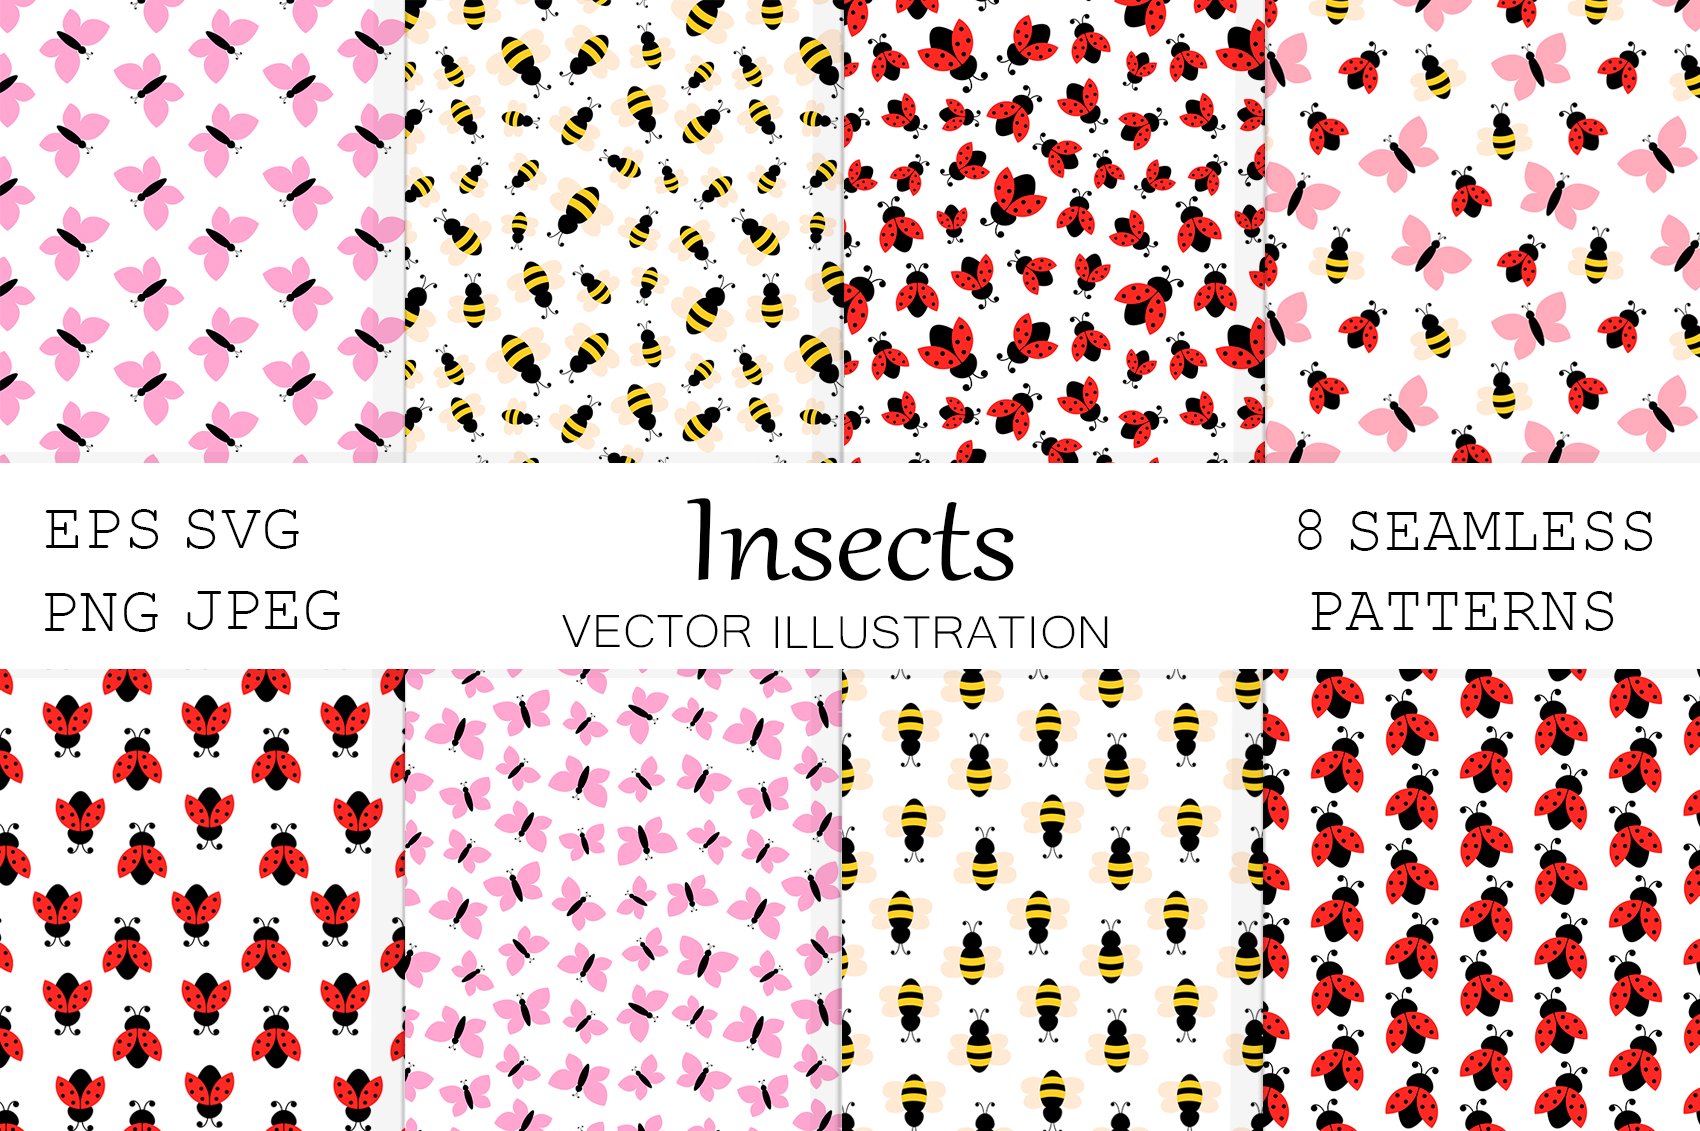 Bee pattern. Ladybug pattern cover image.